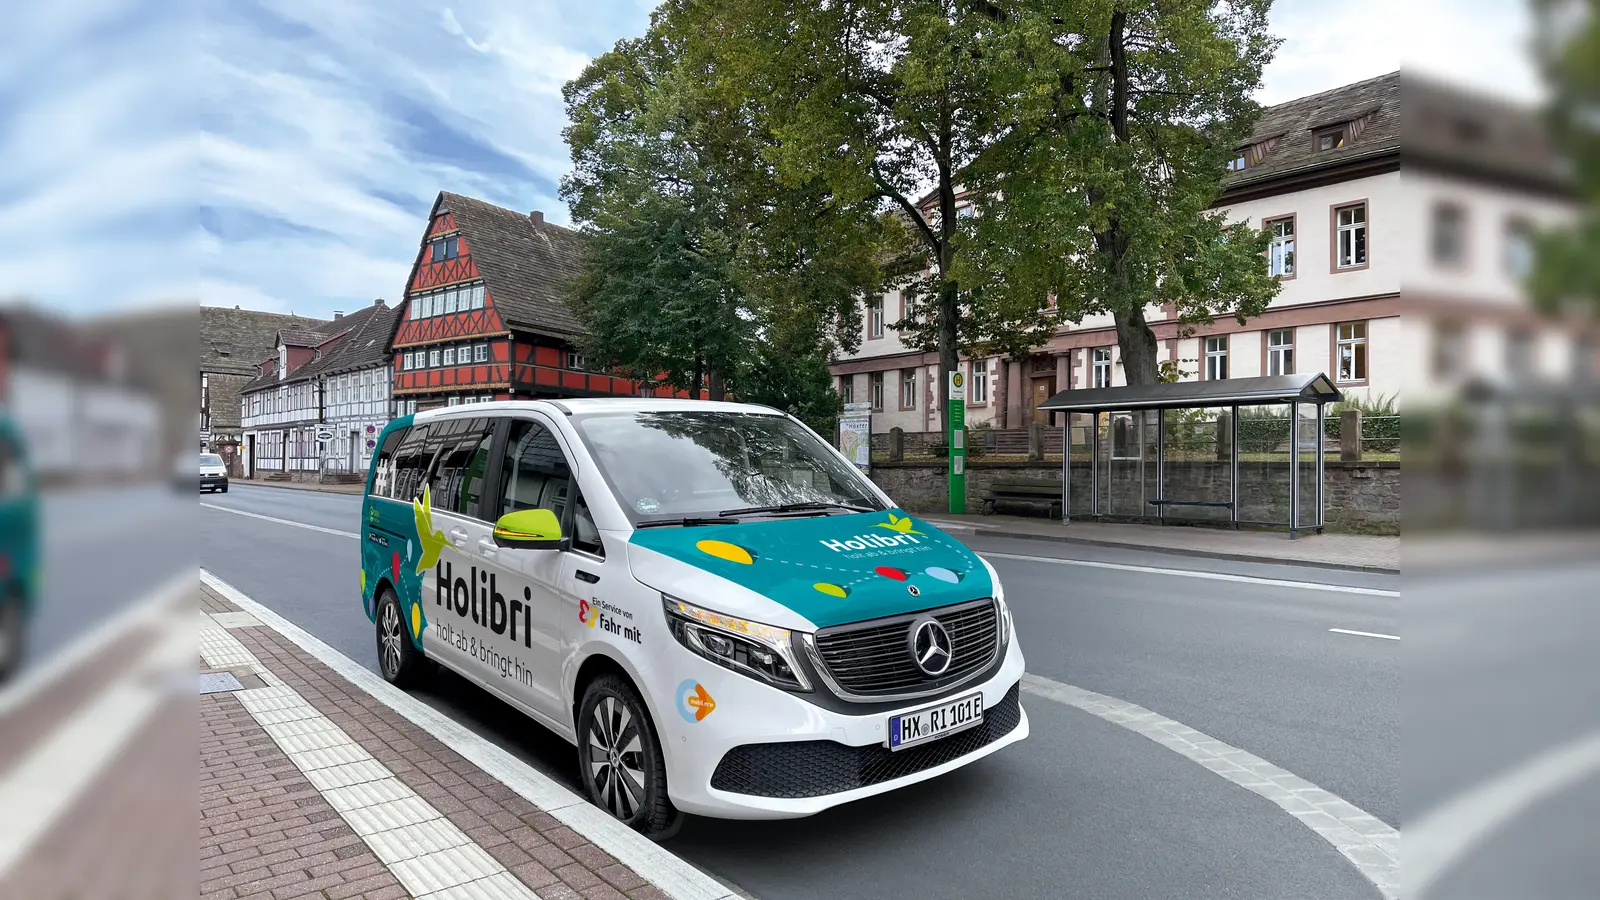 Holibri-Fahrzeug in Höxter. (Foto: nph)